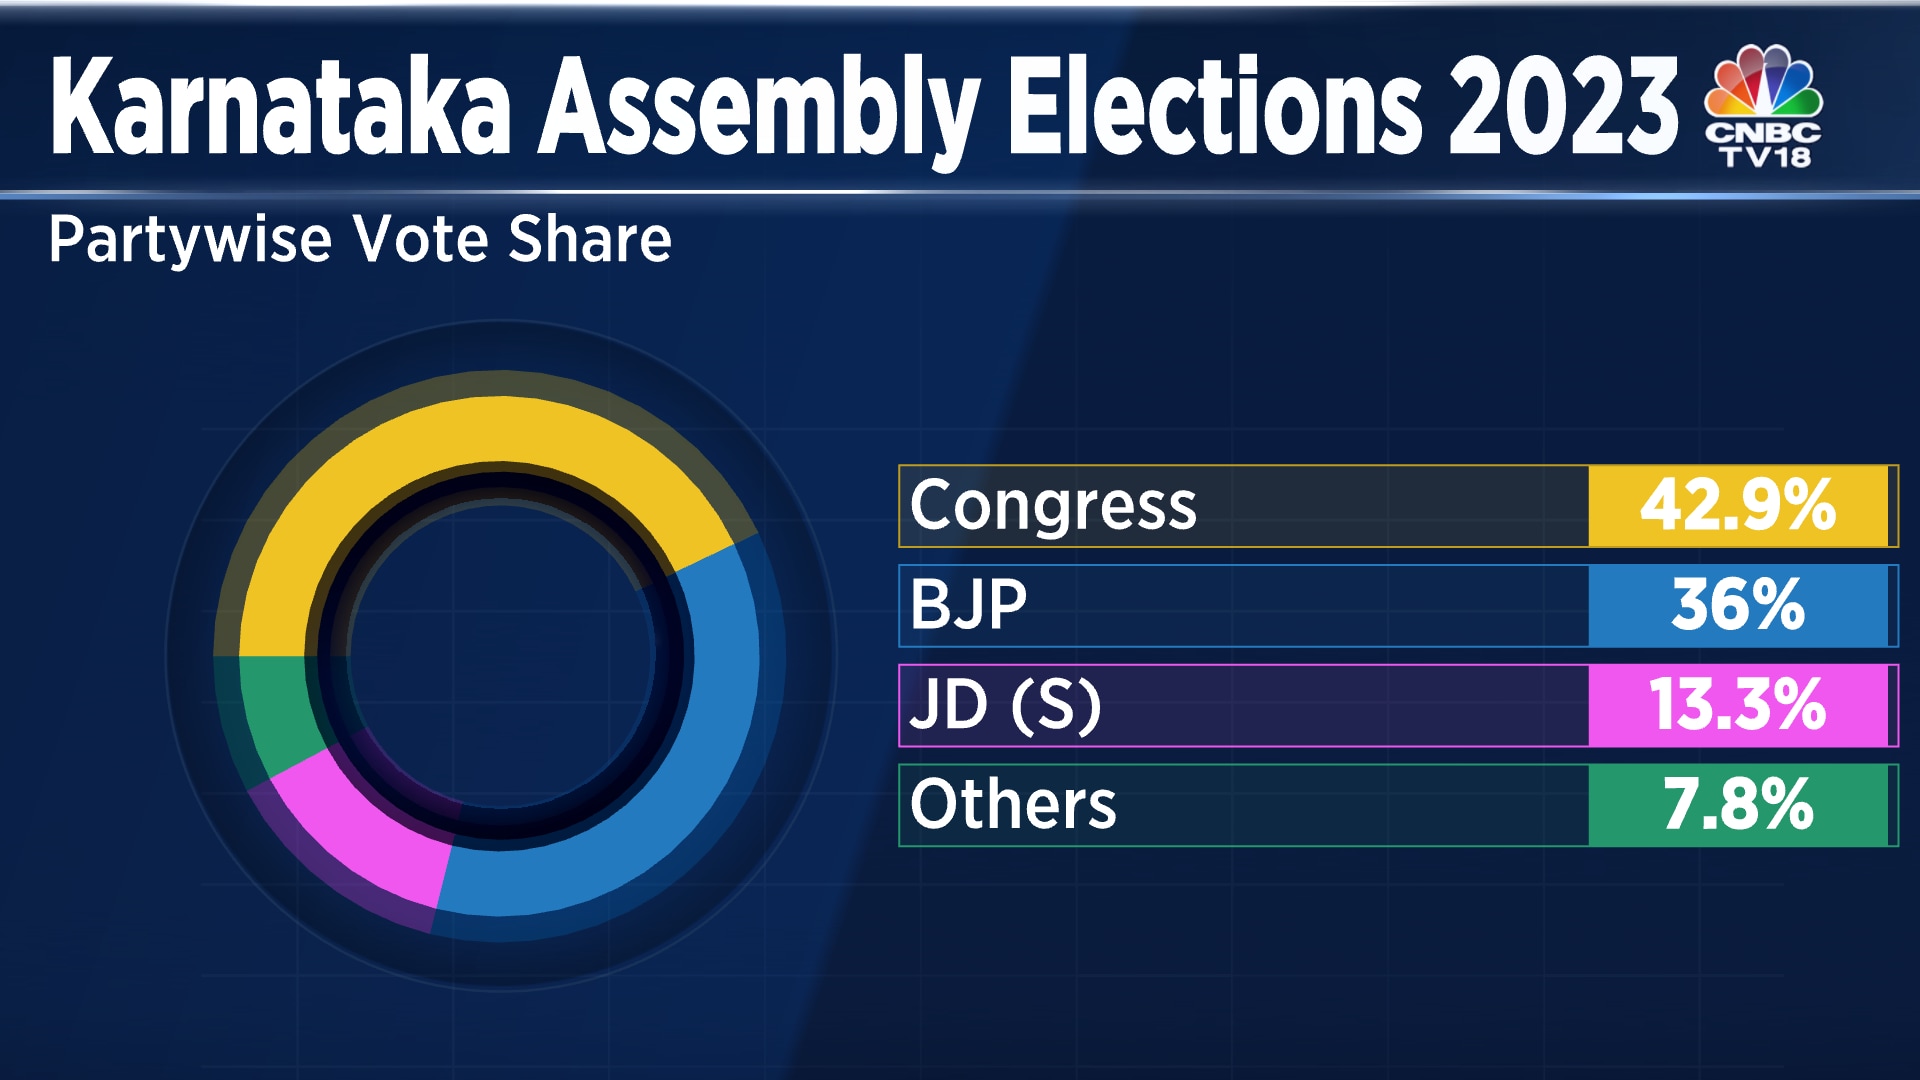 Karnataka Election Results 2023 Congress captures its highest vote